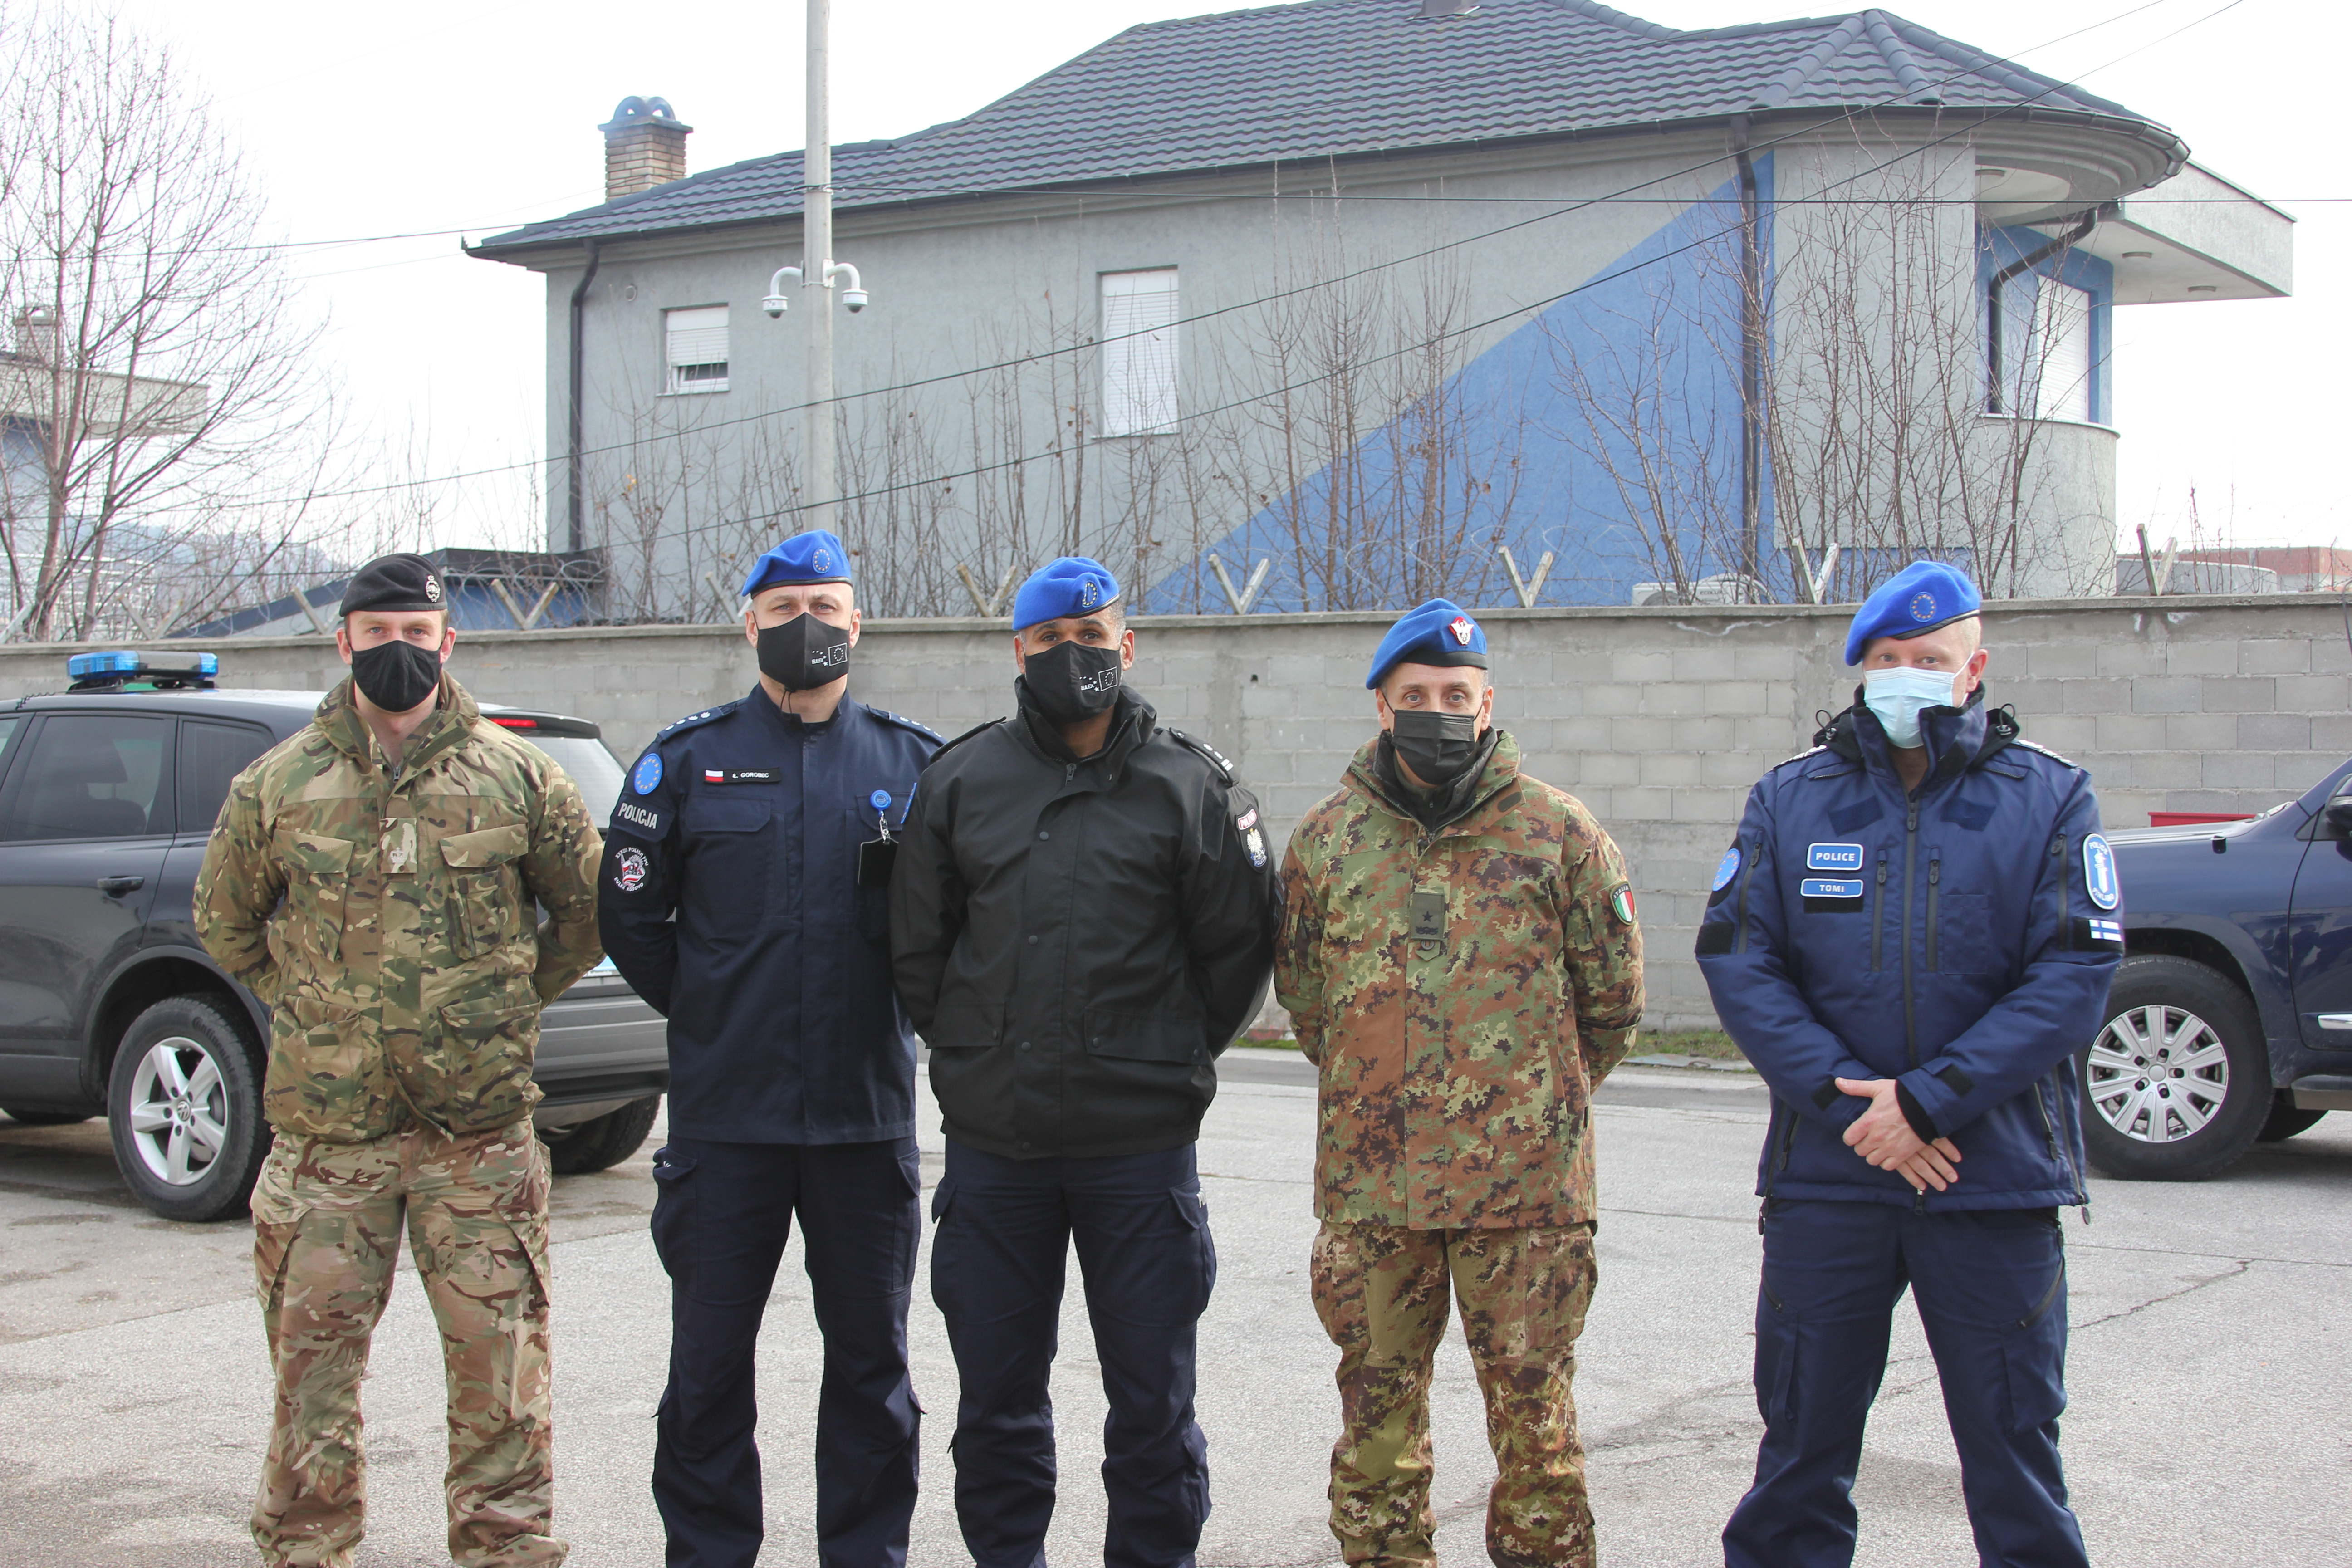 EULEX’s Operations Support Pillar Head met with KFOR’s Deputy Commander